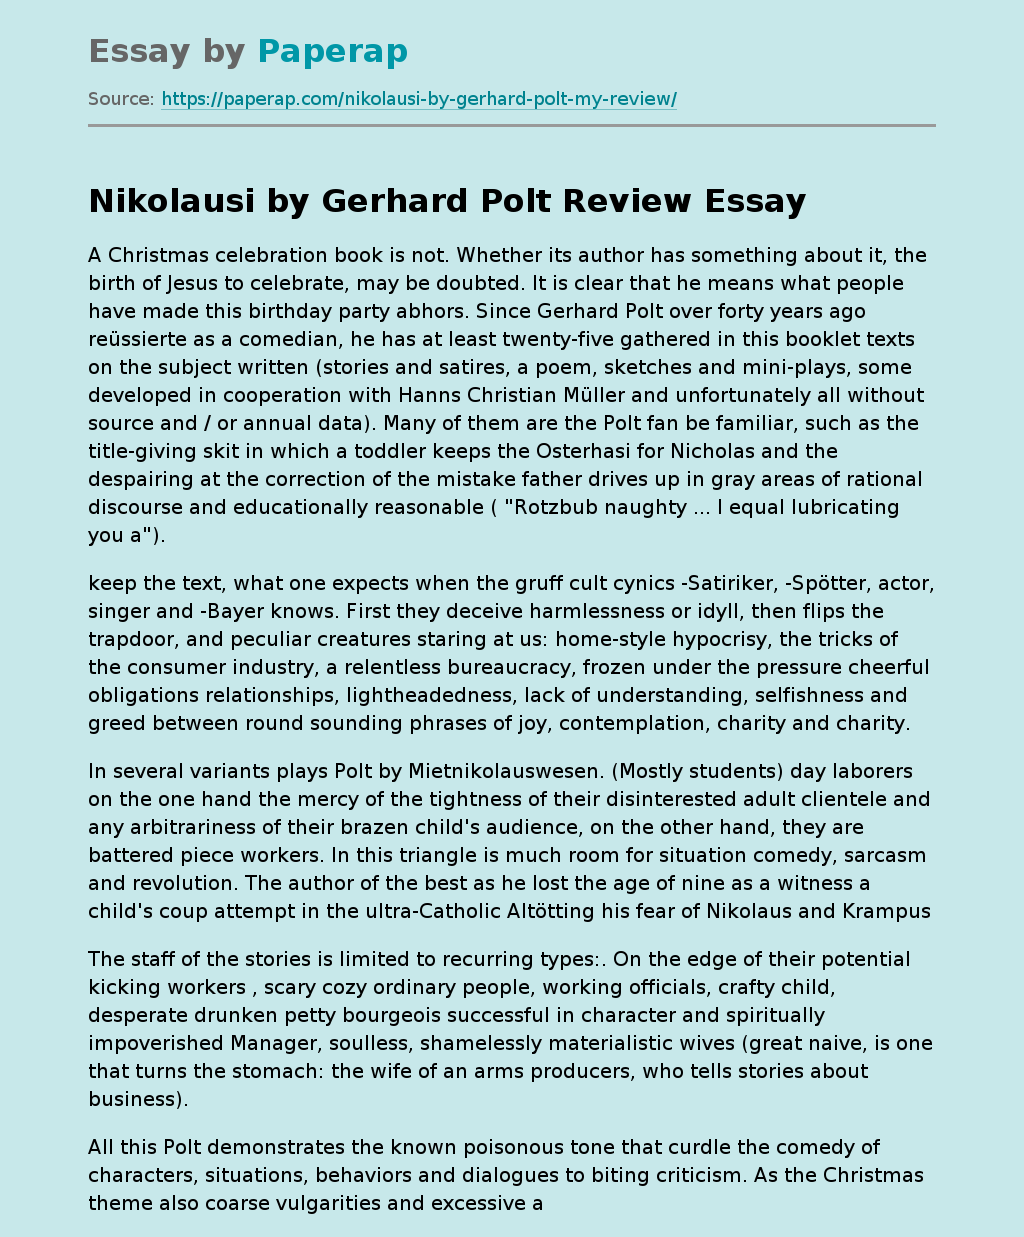 Book "Nikolausi" by Gerhard Polt